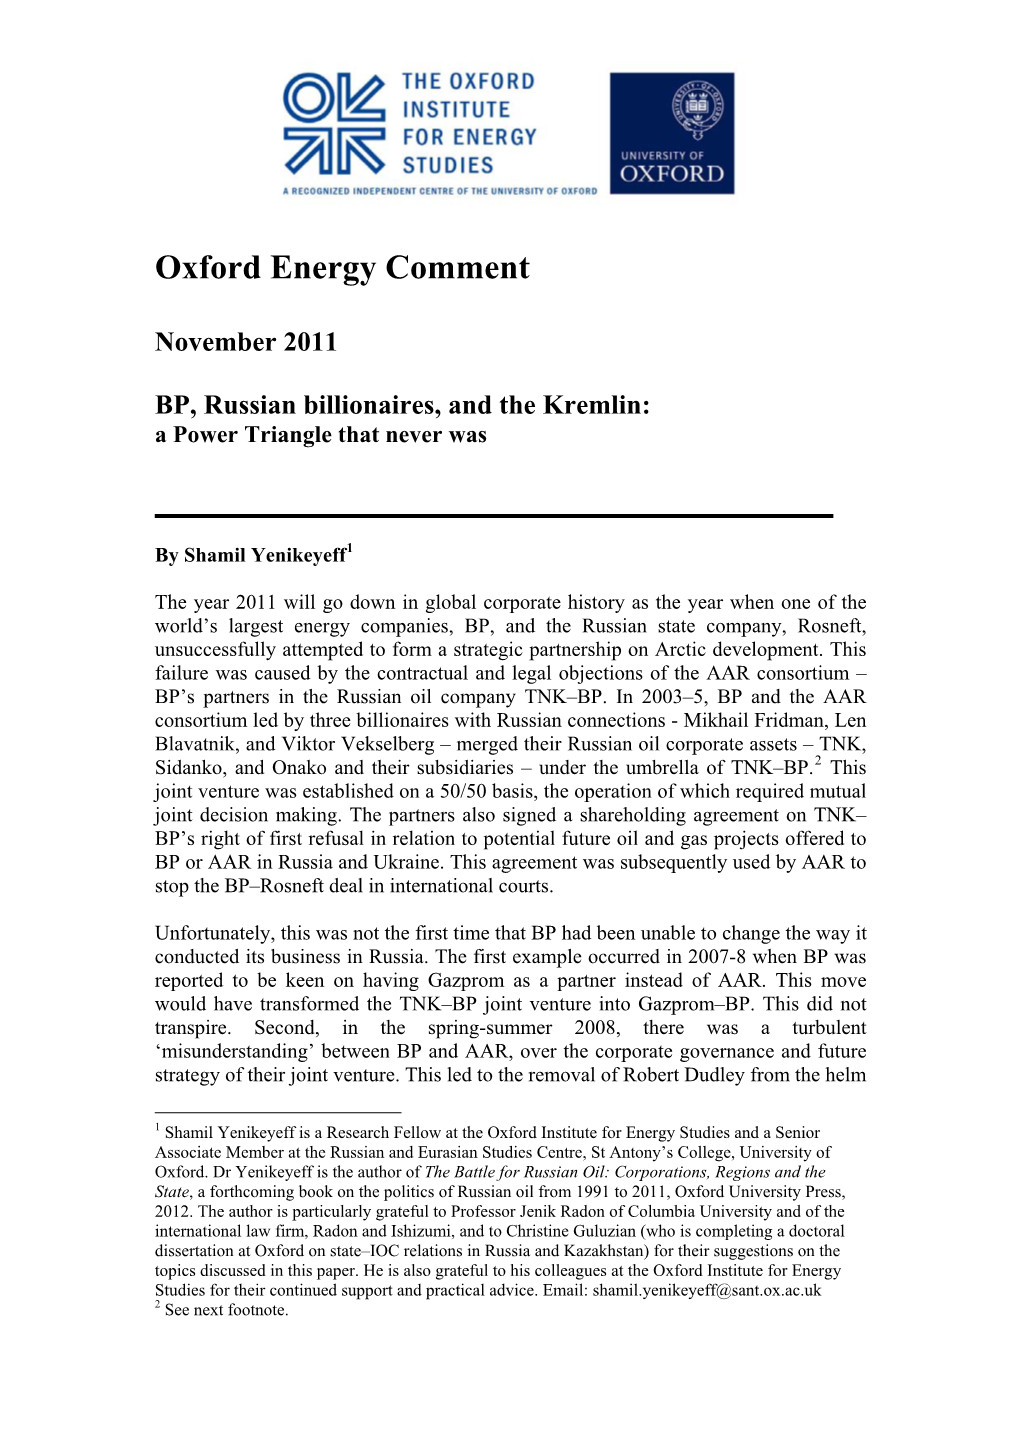 BP, Russian Billionaires and the Kremlin